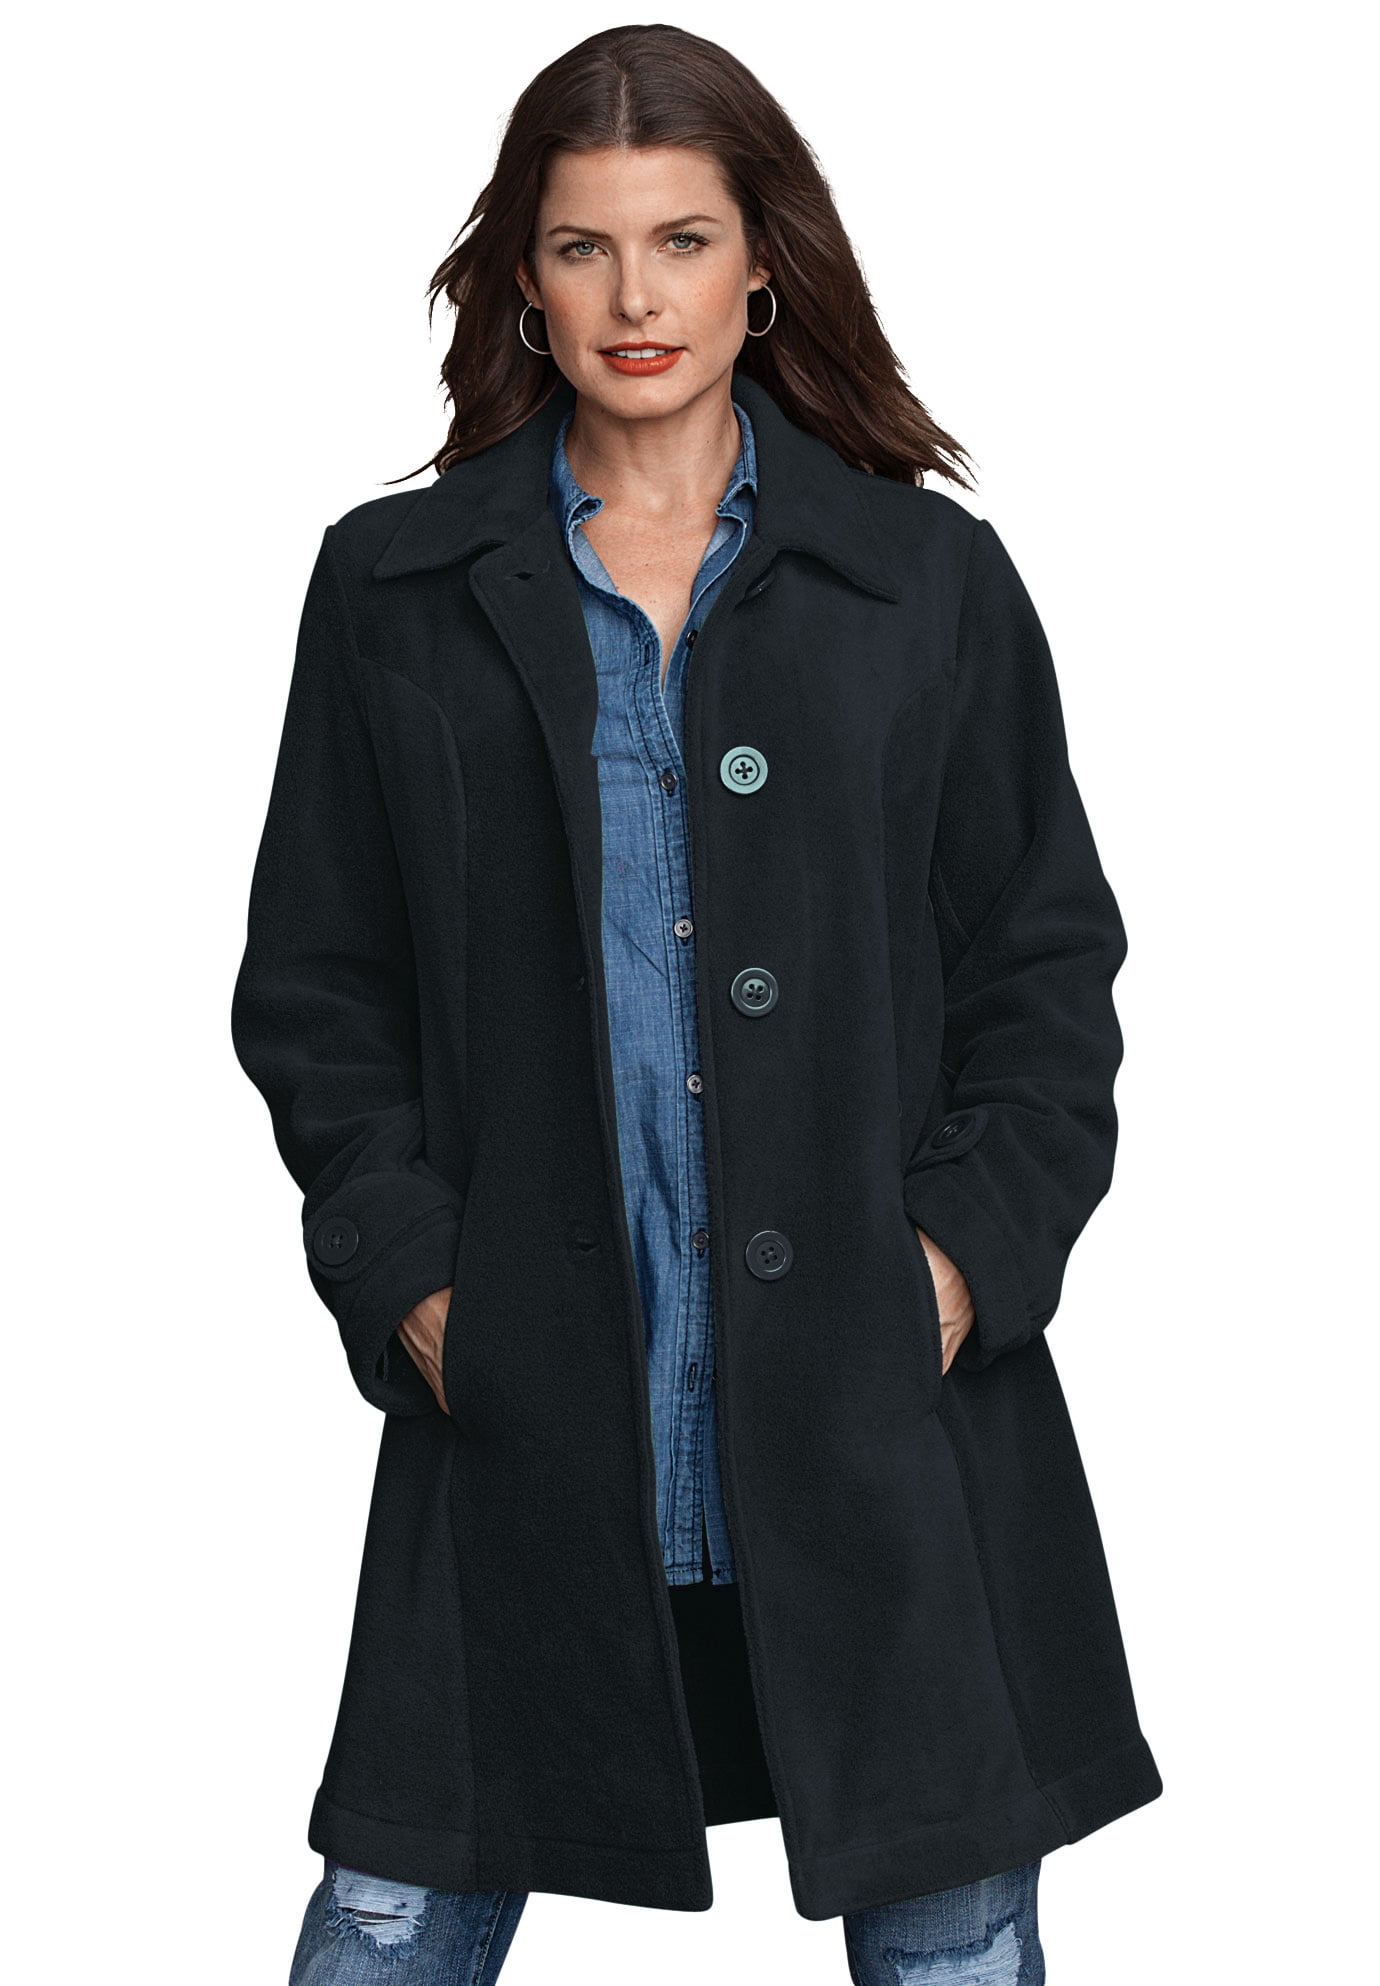 Roaman's - Roaman's Women's Plus Size Plush Fleece Jacket - Walmart.com ...